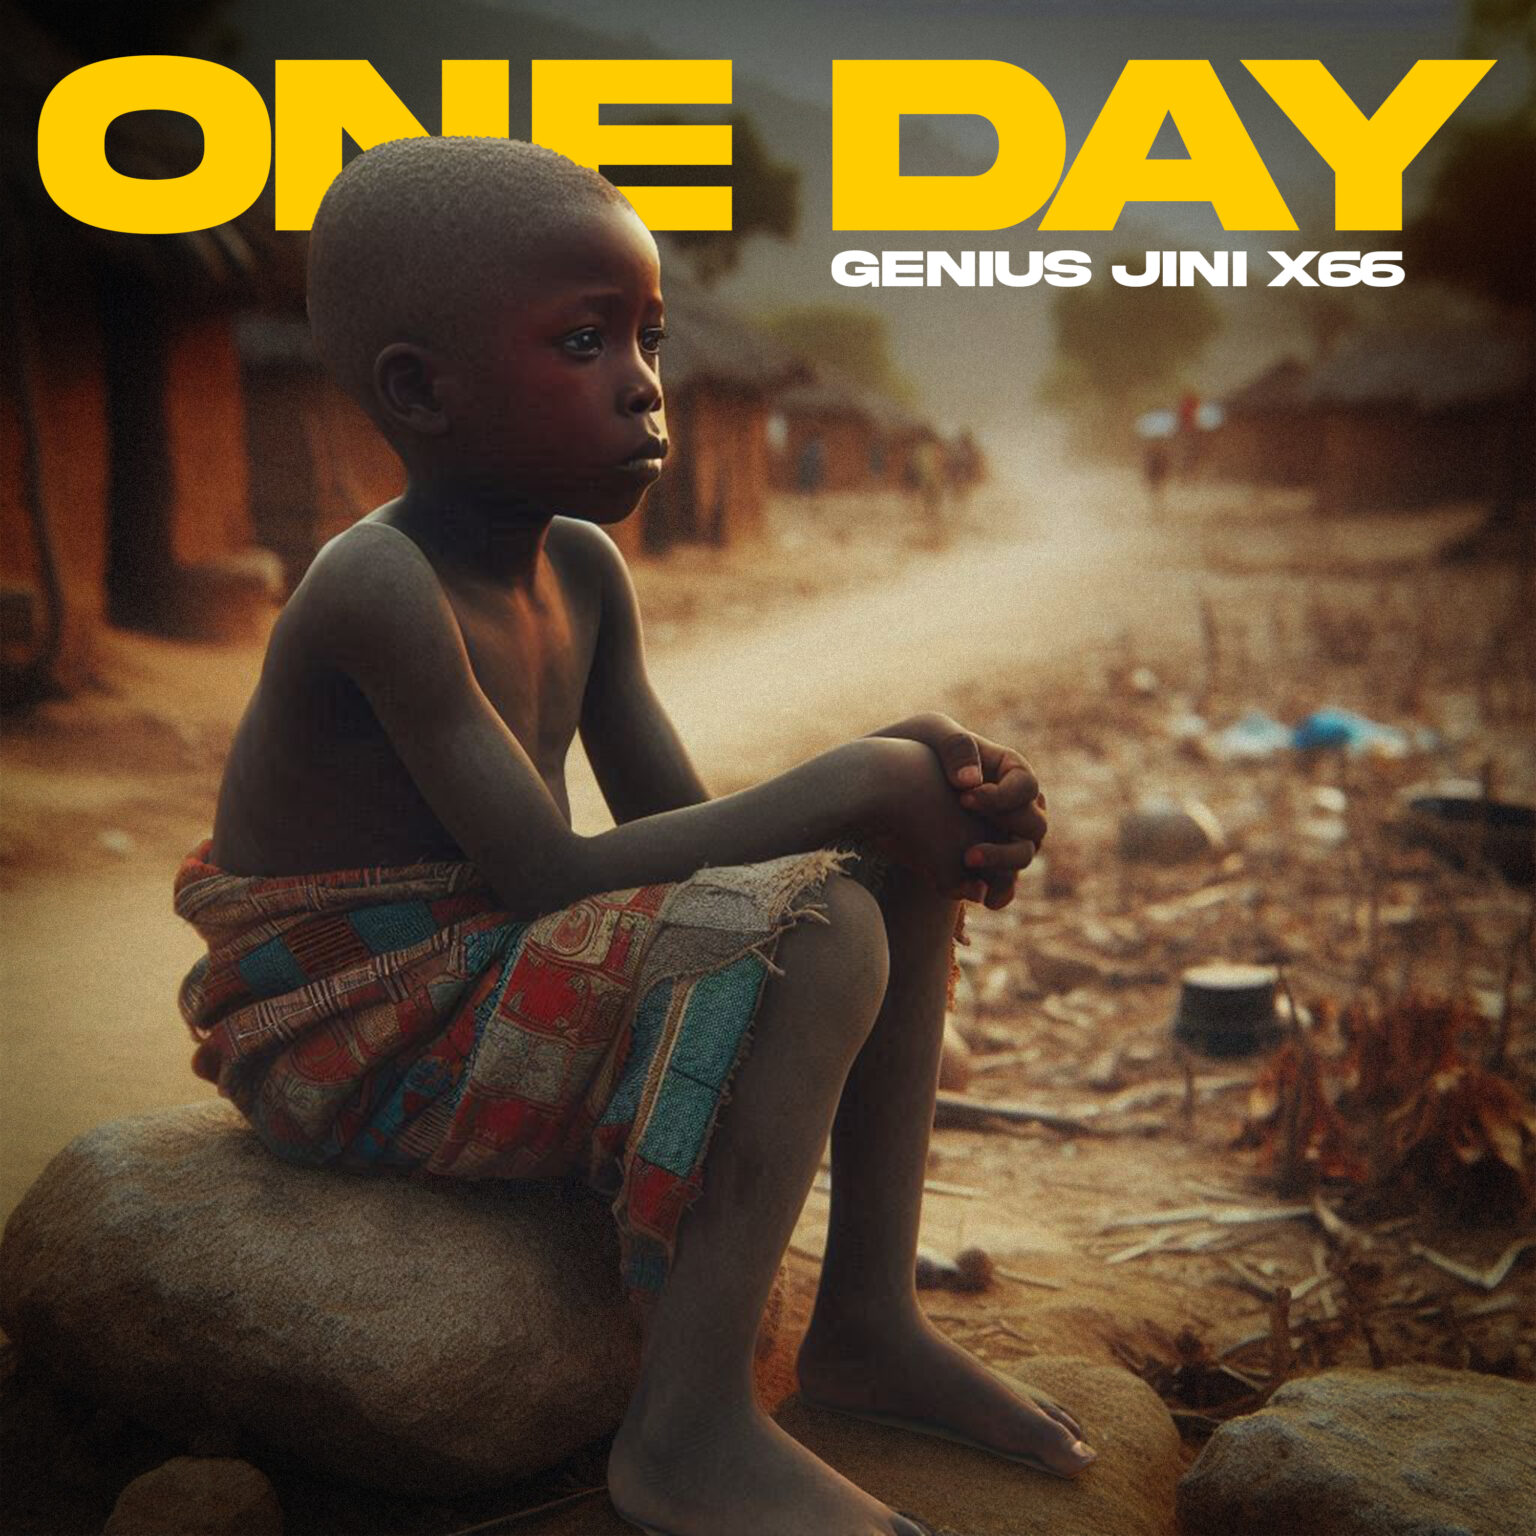 Geniusjini x66 - One Day